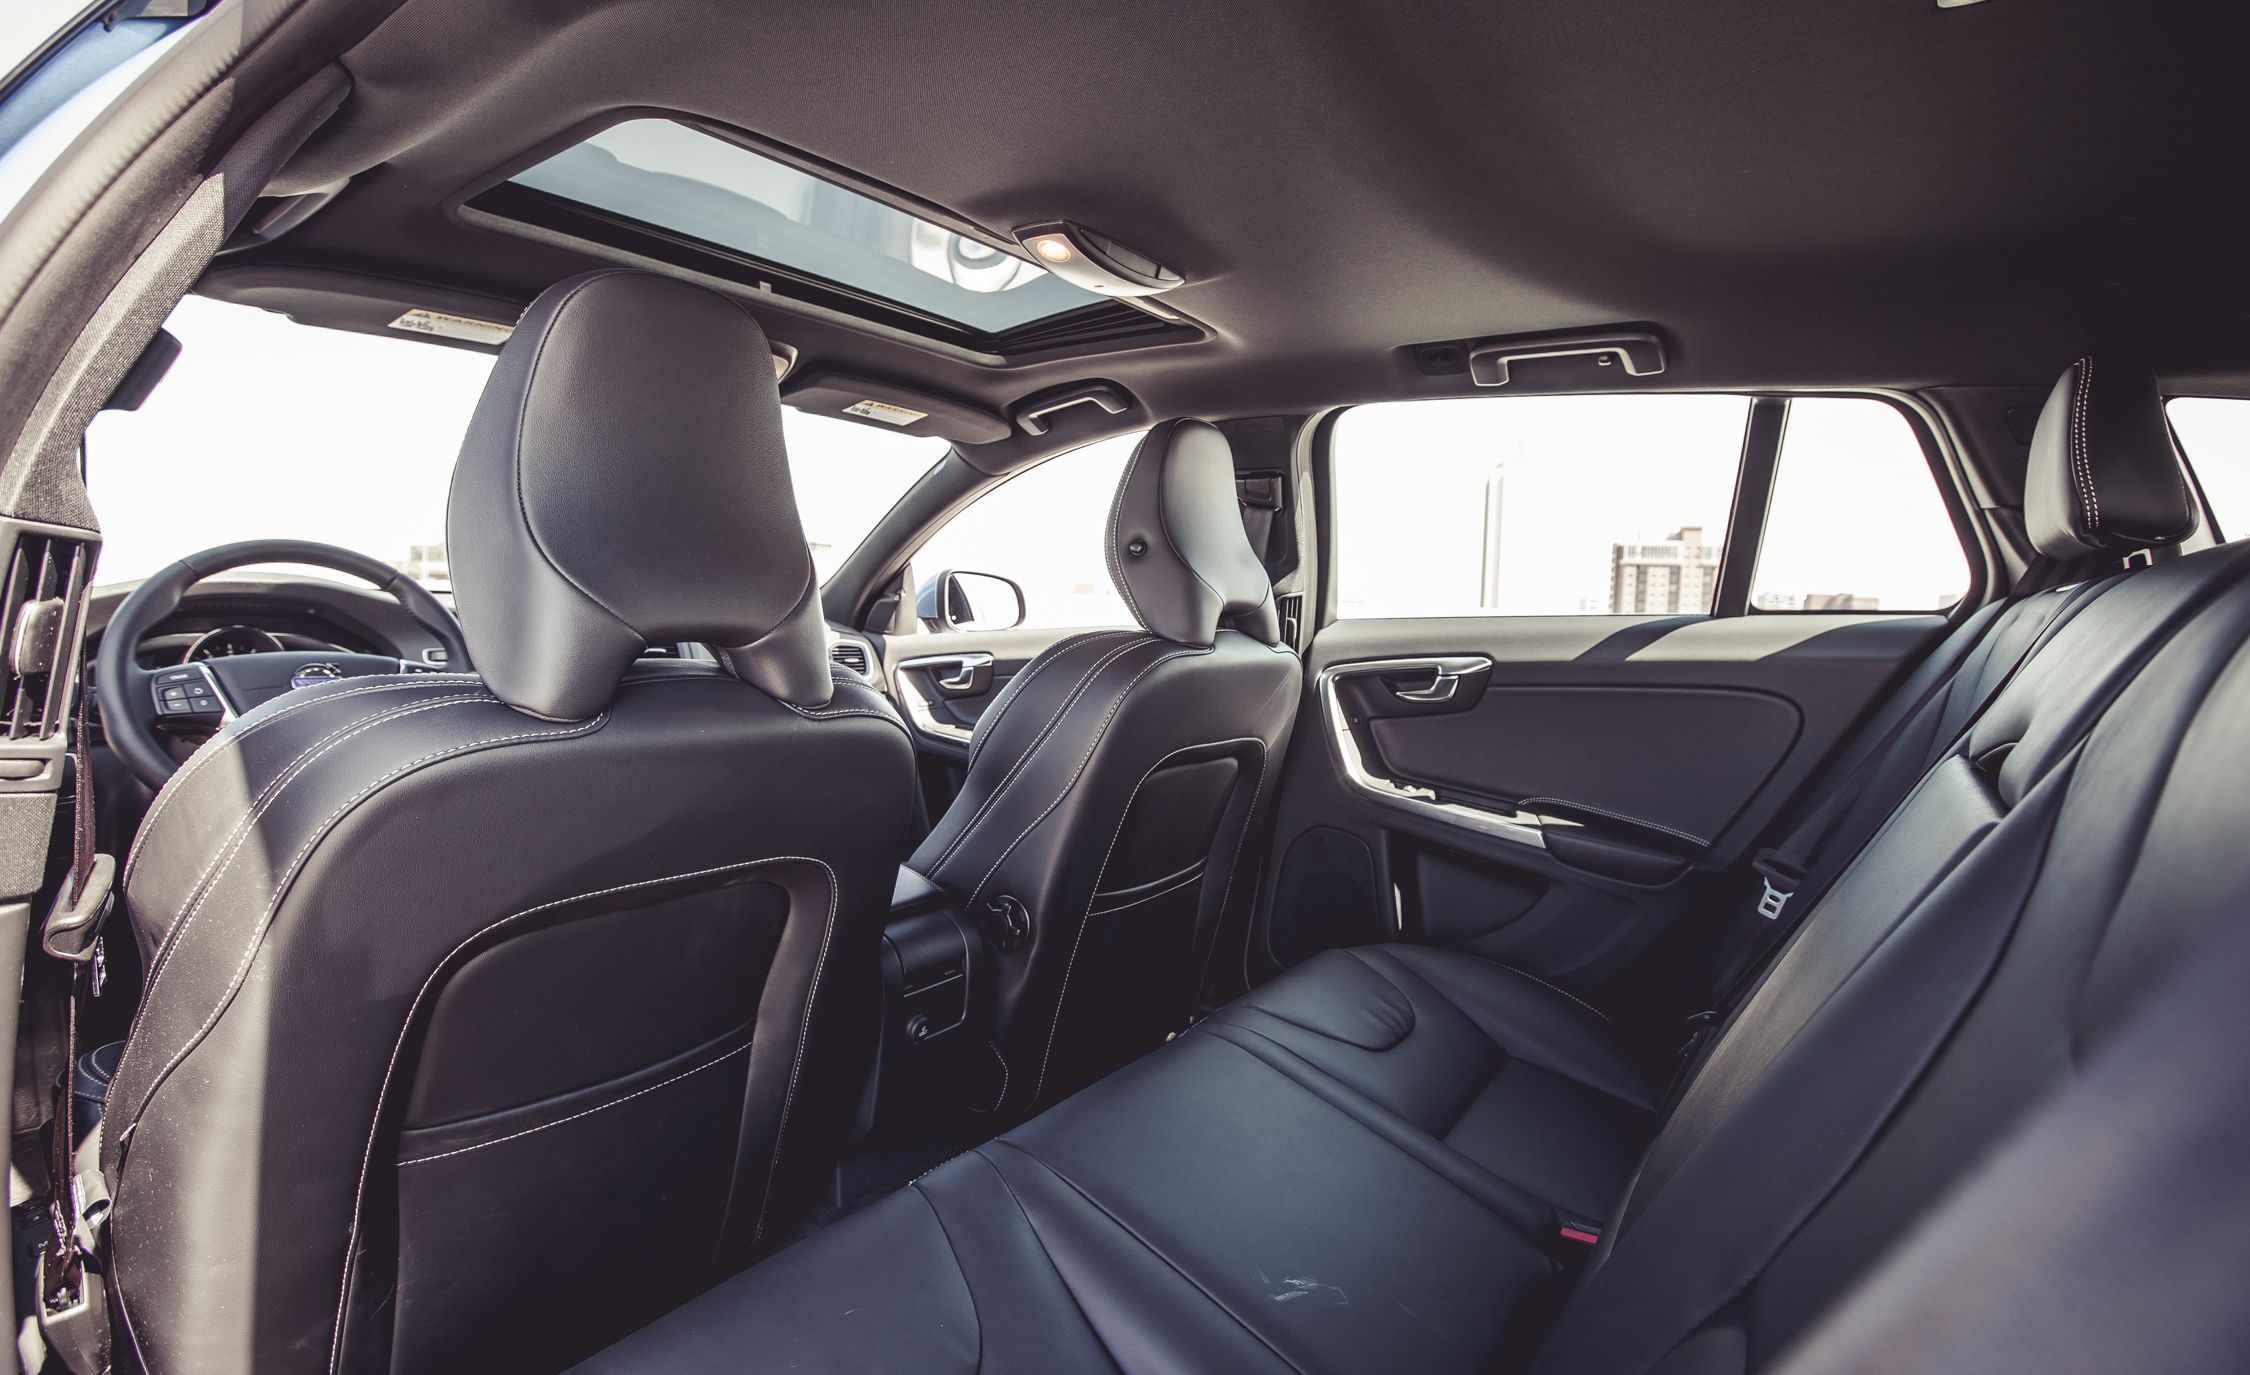 2015 Volvo V60 Interior (View 2 of 38)